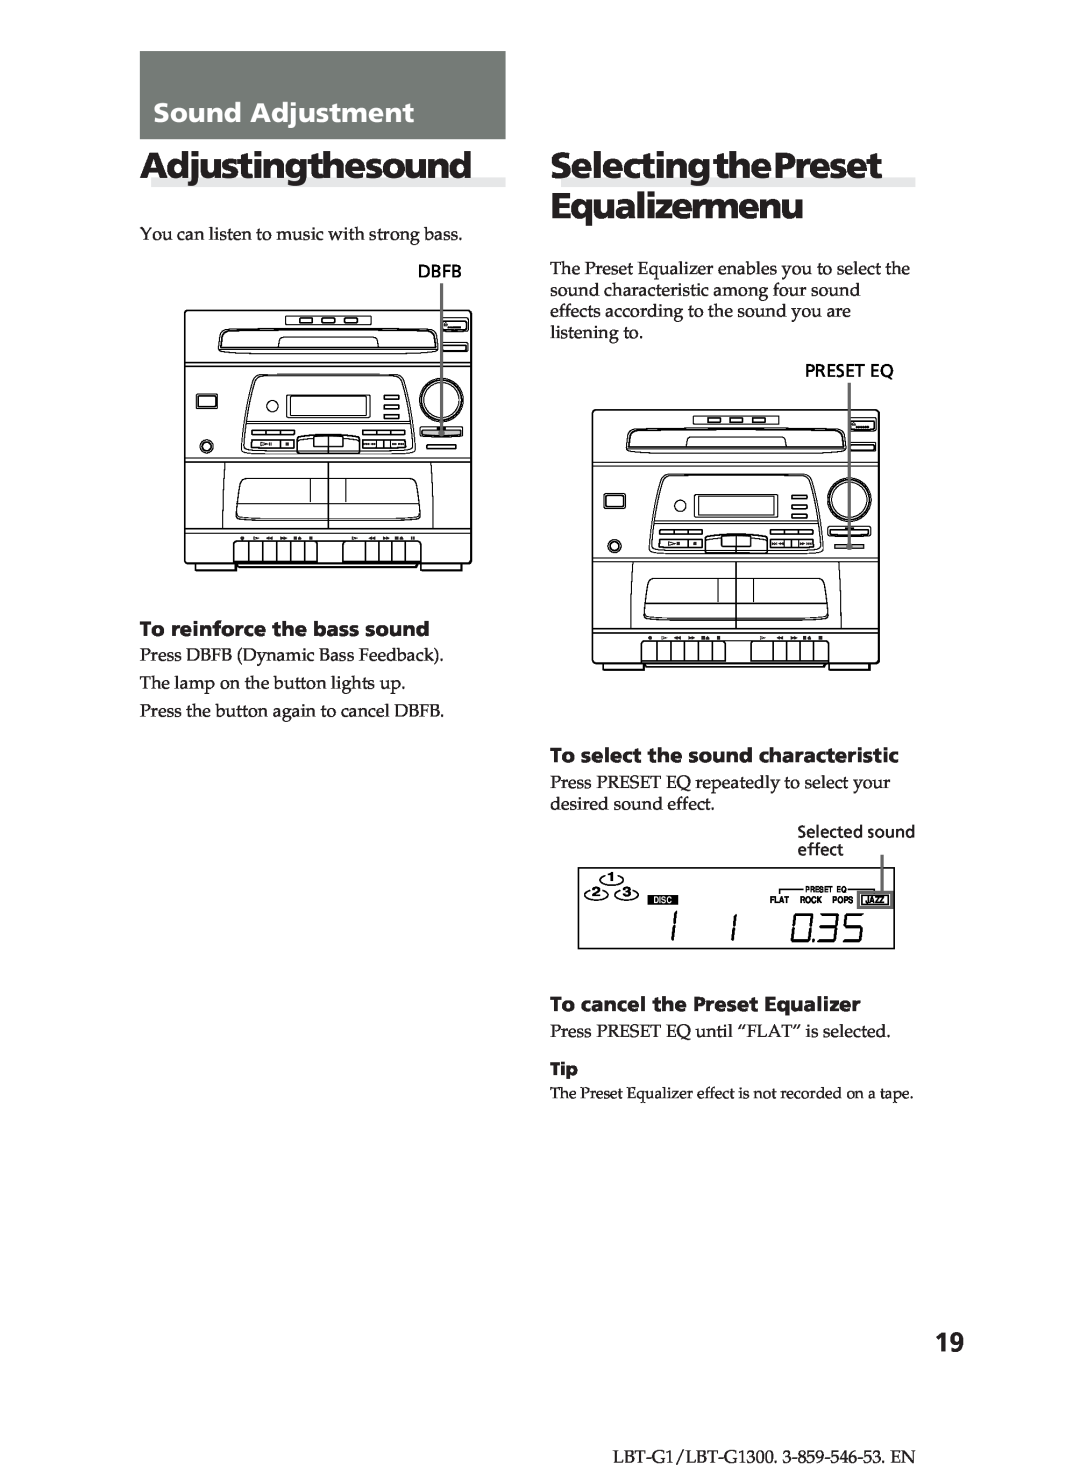 Sony LBT-G1300 manual Adjustingthesound, SelectingthePreset Equalizermenu, Sound Adjustment 